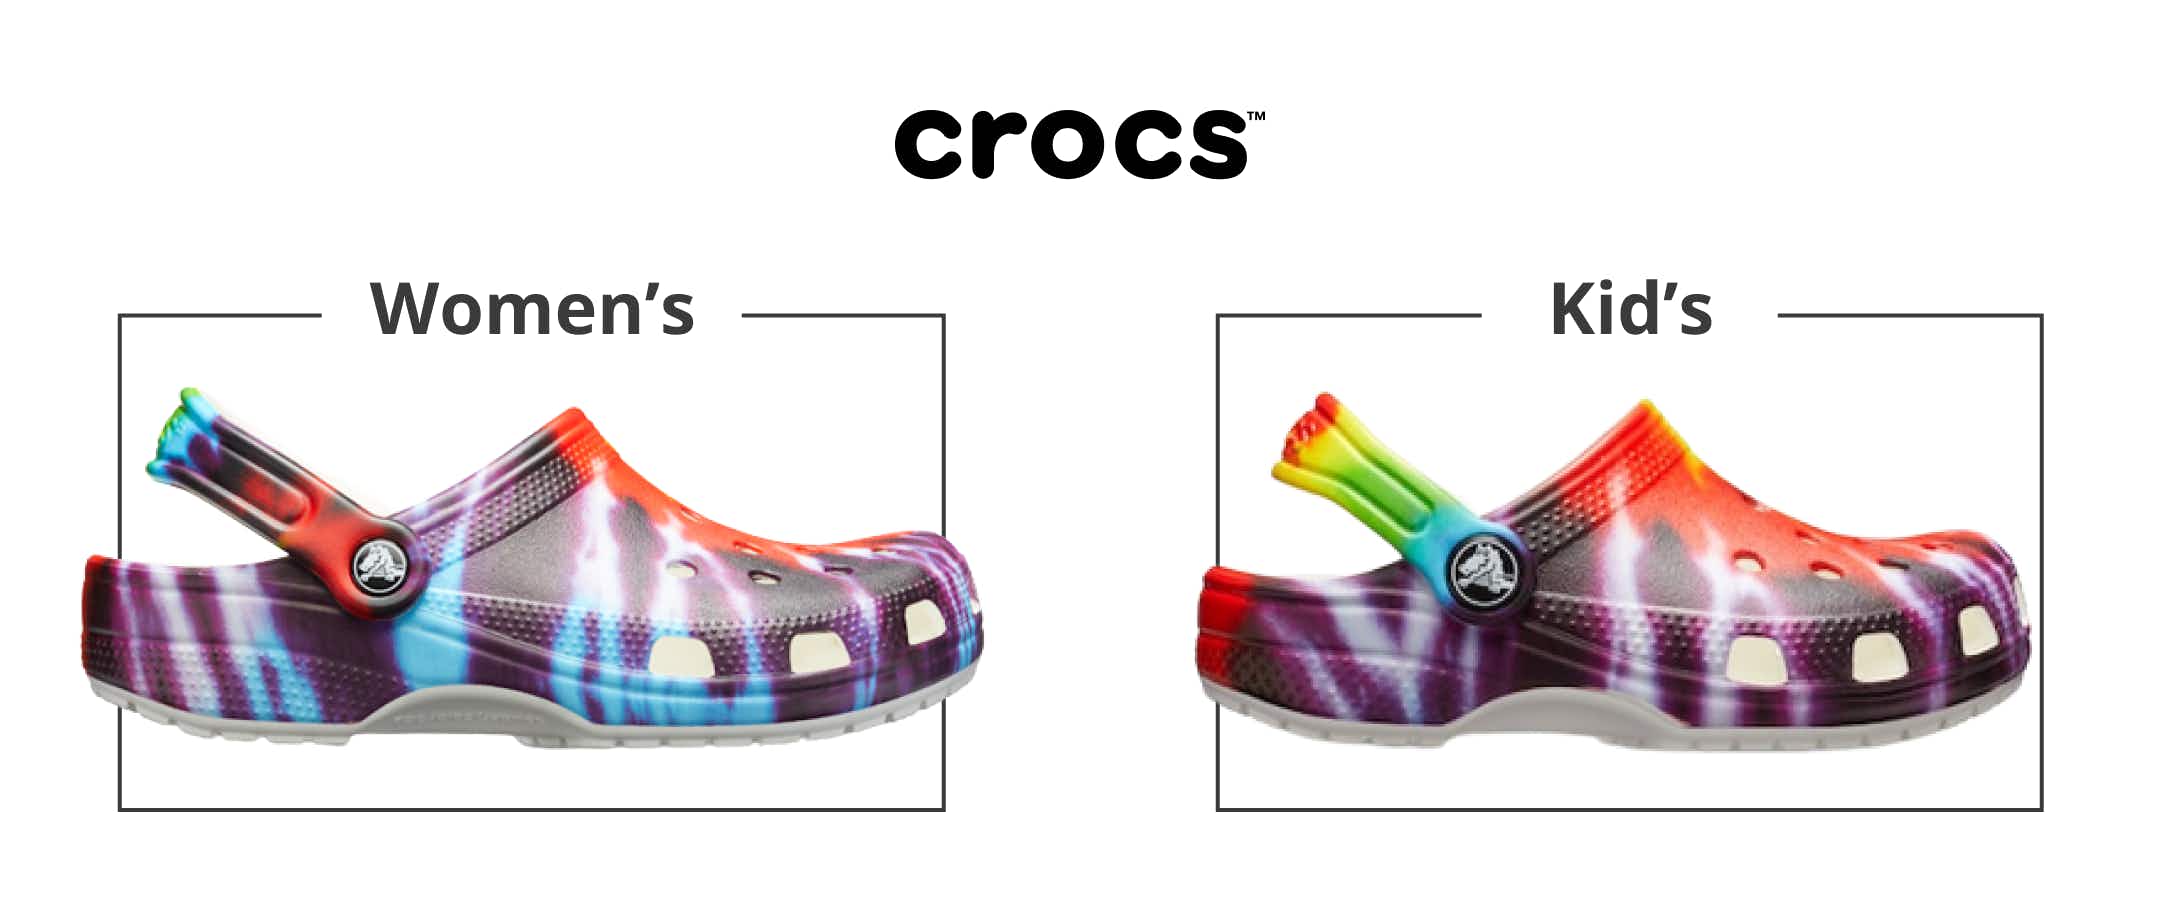 A comparison of a kid's and women's crocs shoe